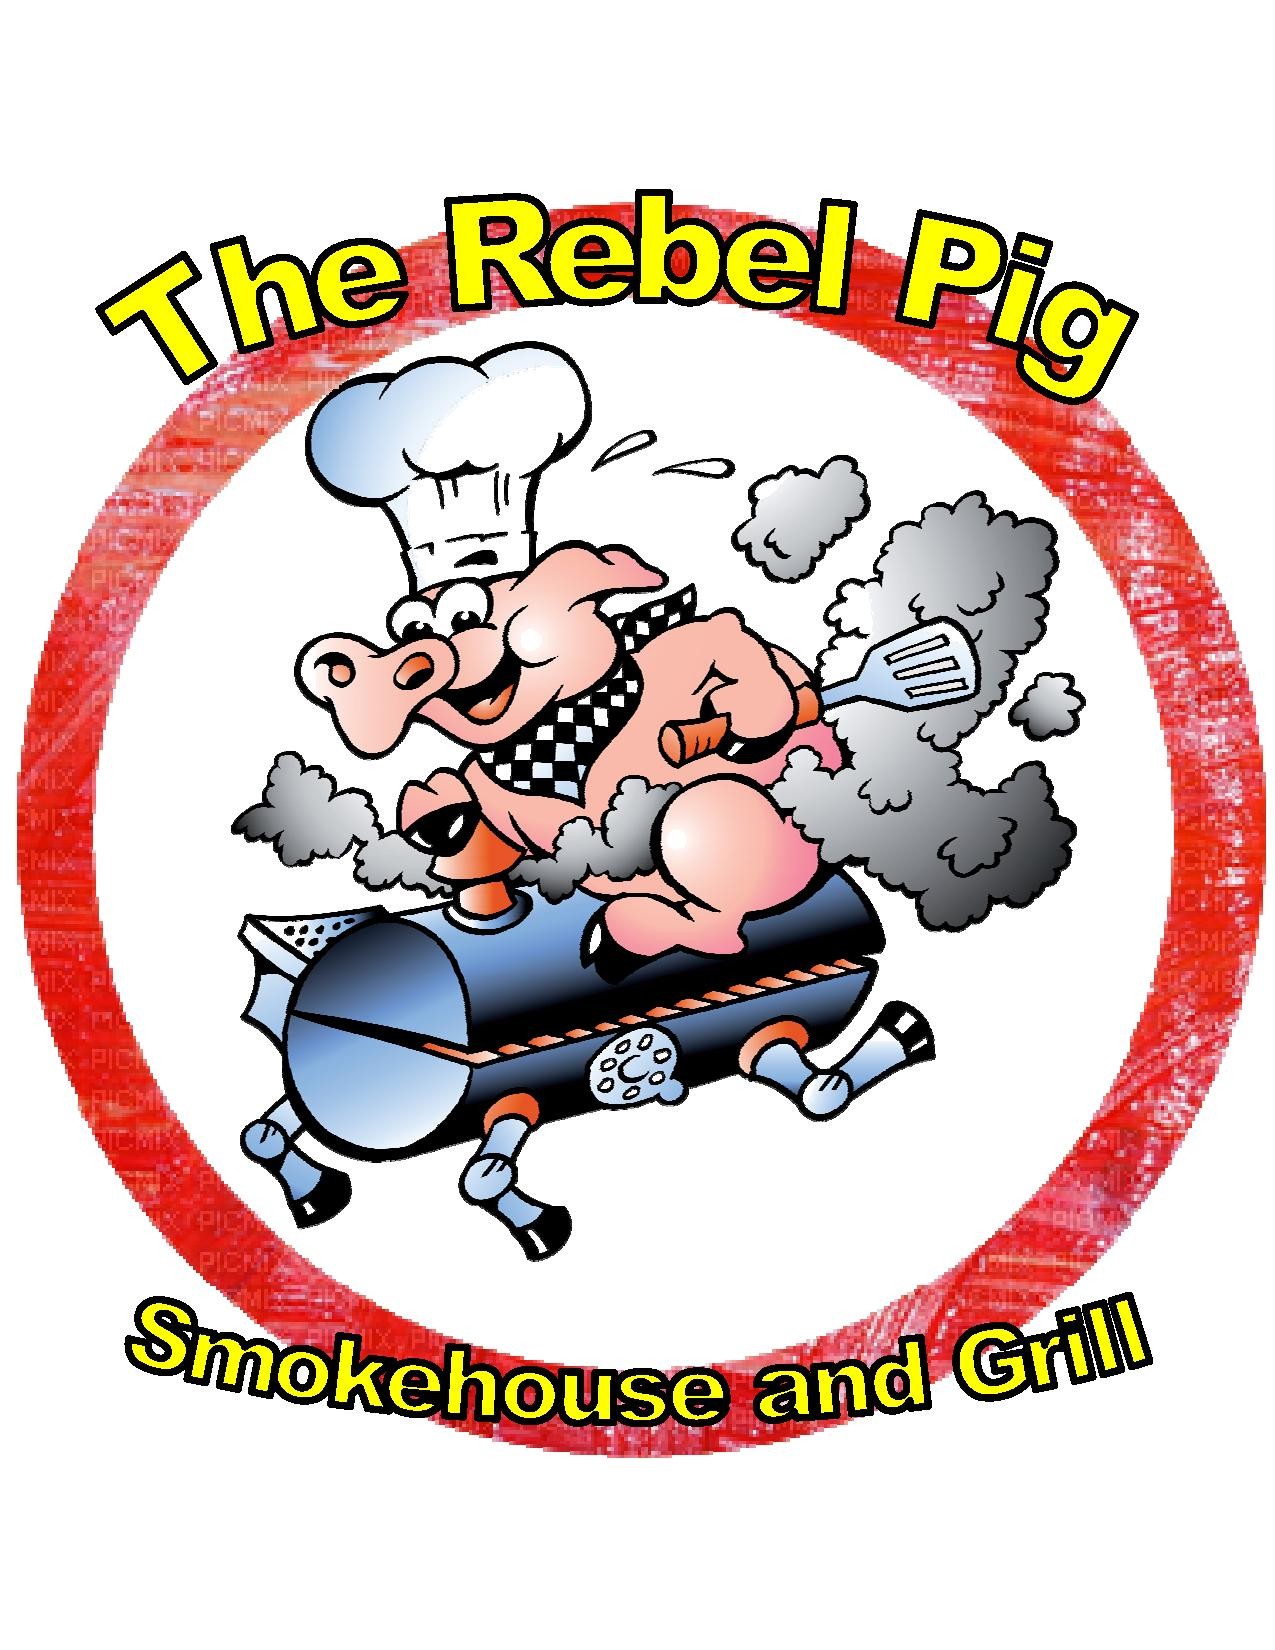 The Rebel Pig